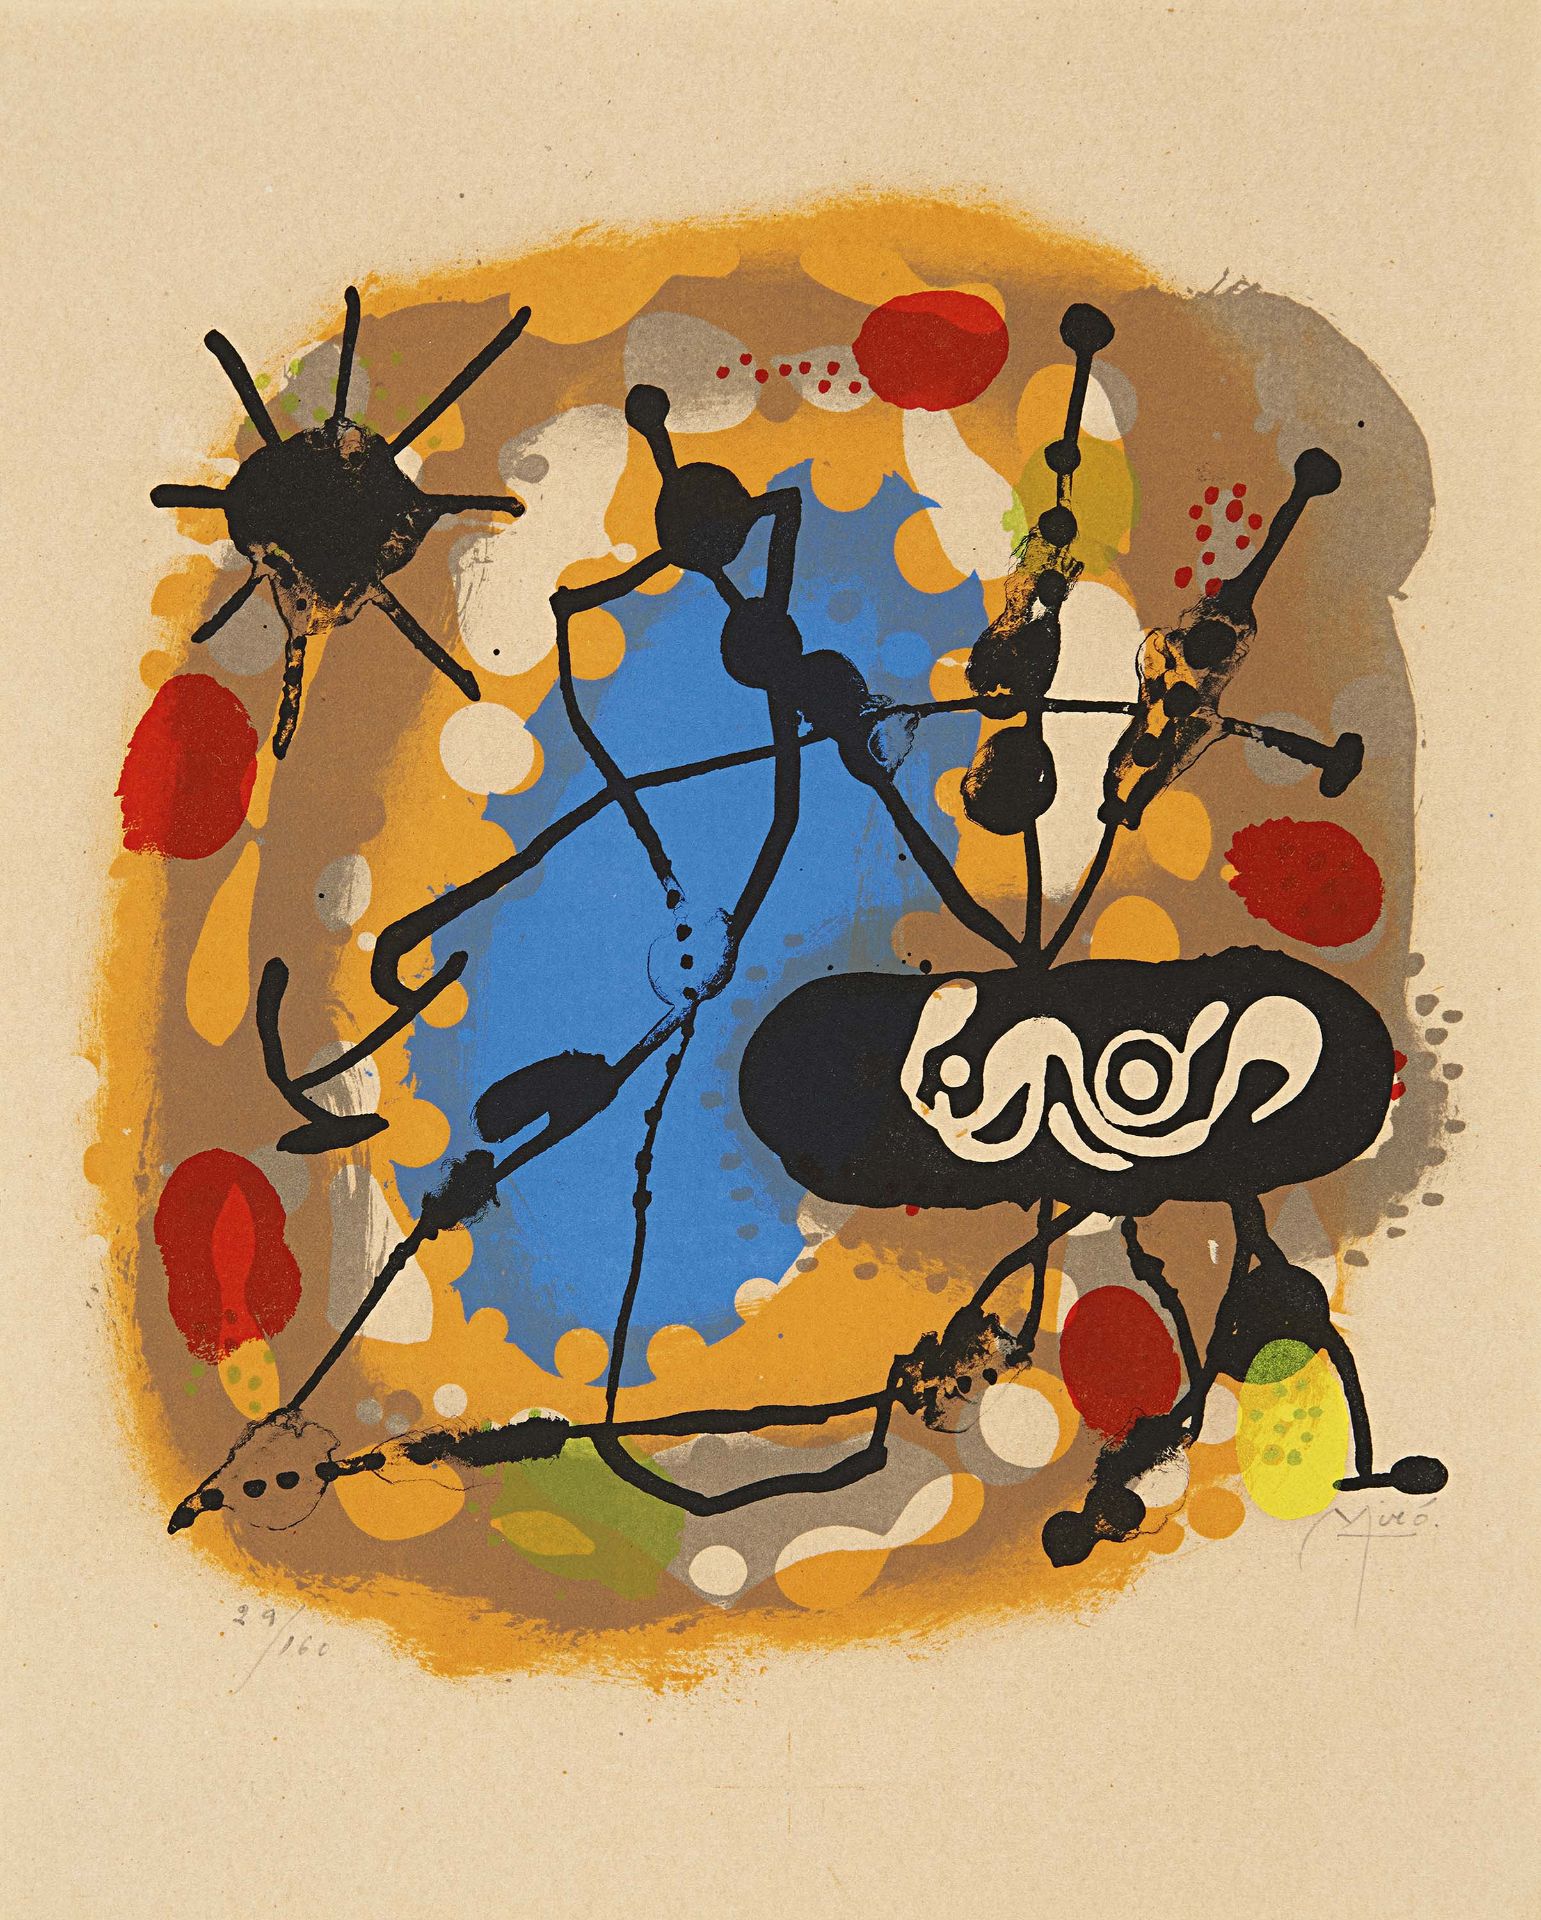 MIRÓ, JOAN1893 Barcelona - 1983 Cala Major/MallorcaTitle: Atmósfera Miró. Date: 1959. Technique: